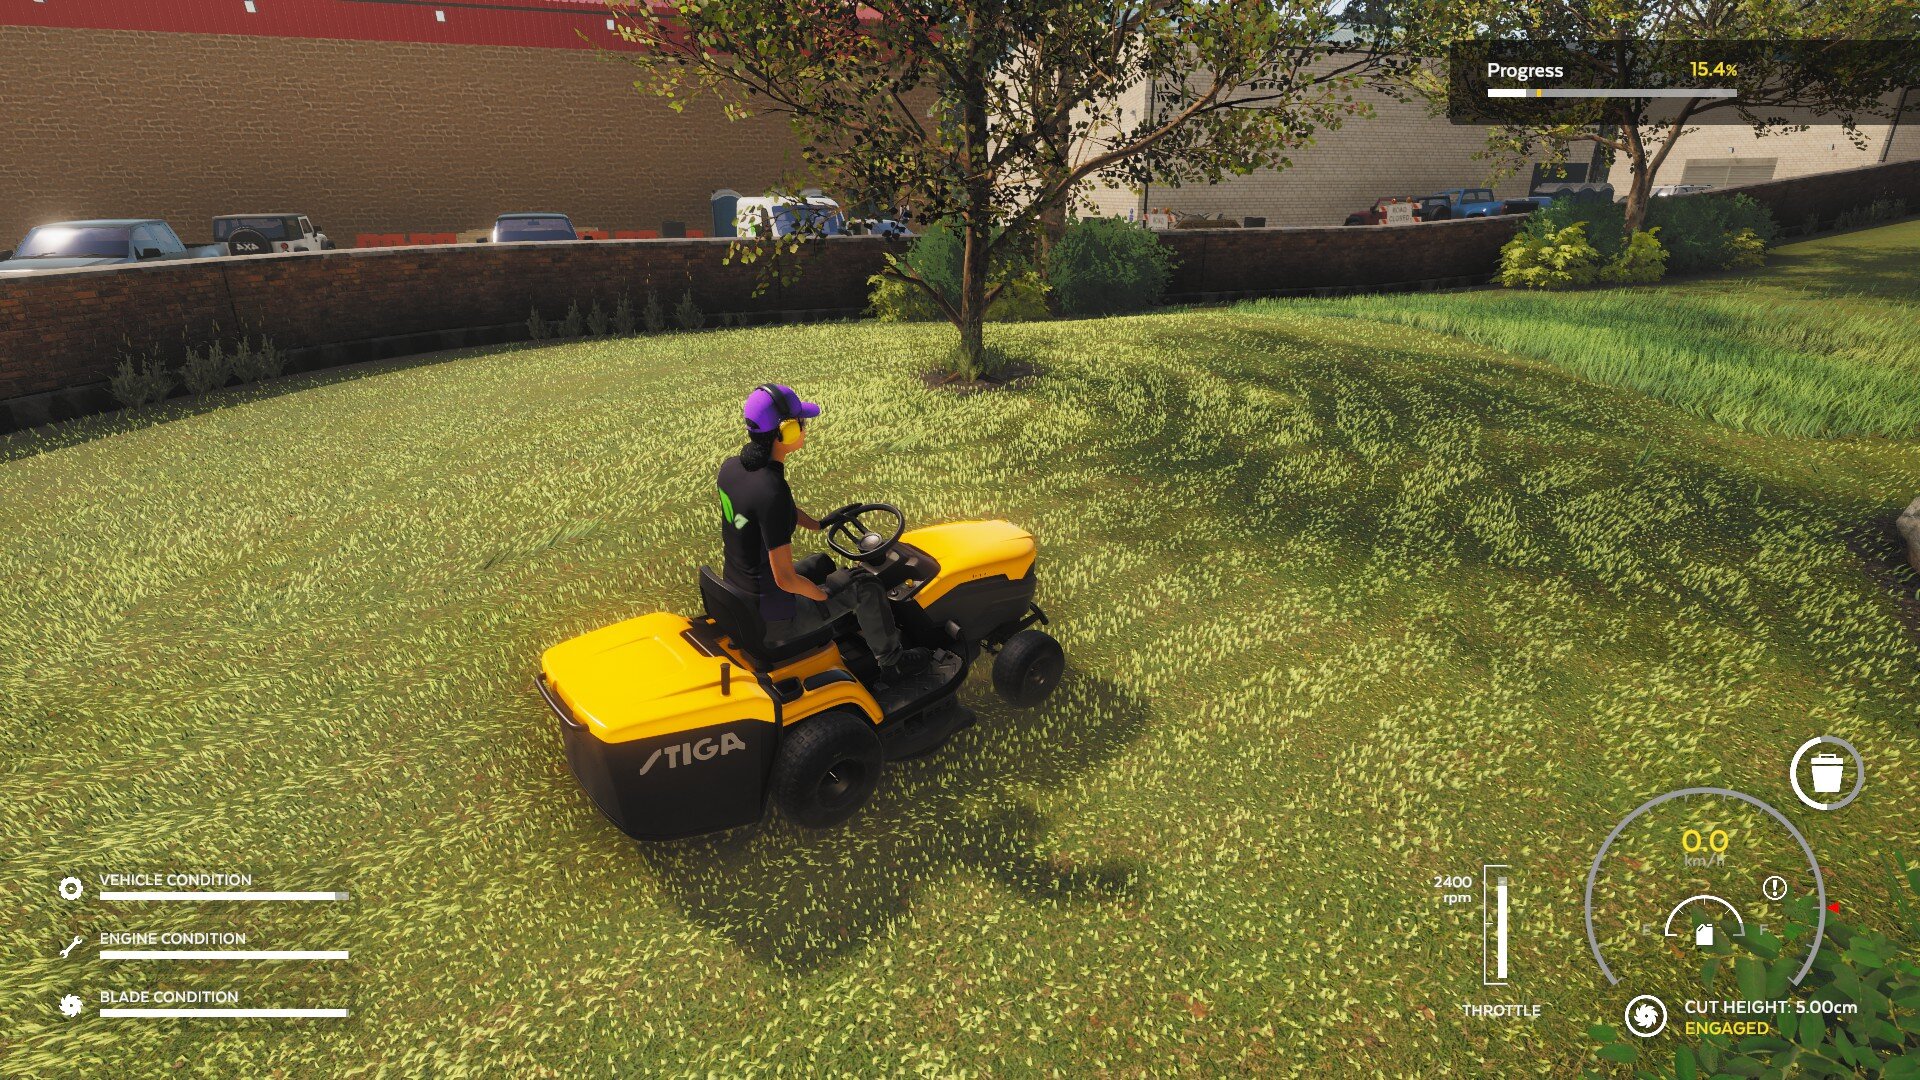 Lawn Mowing Simulator 